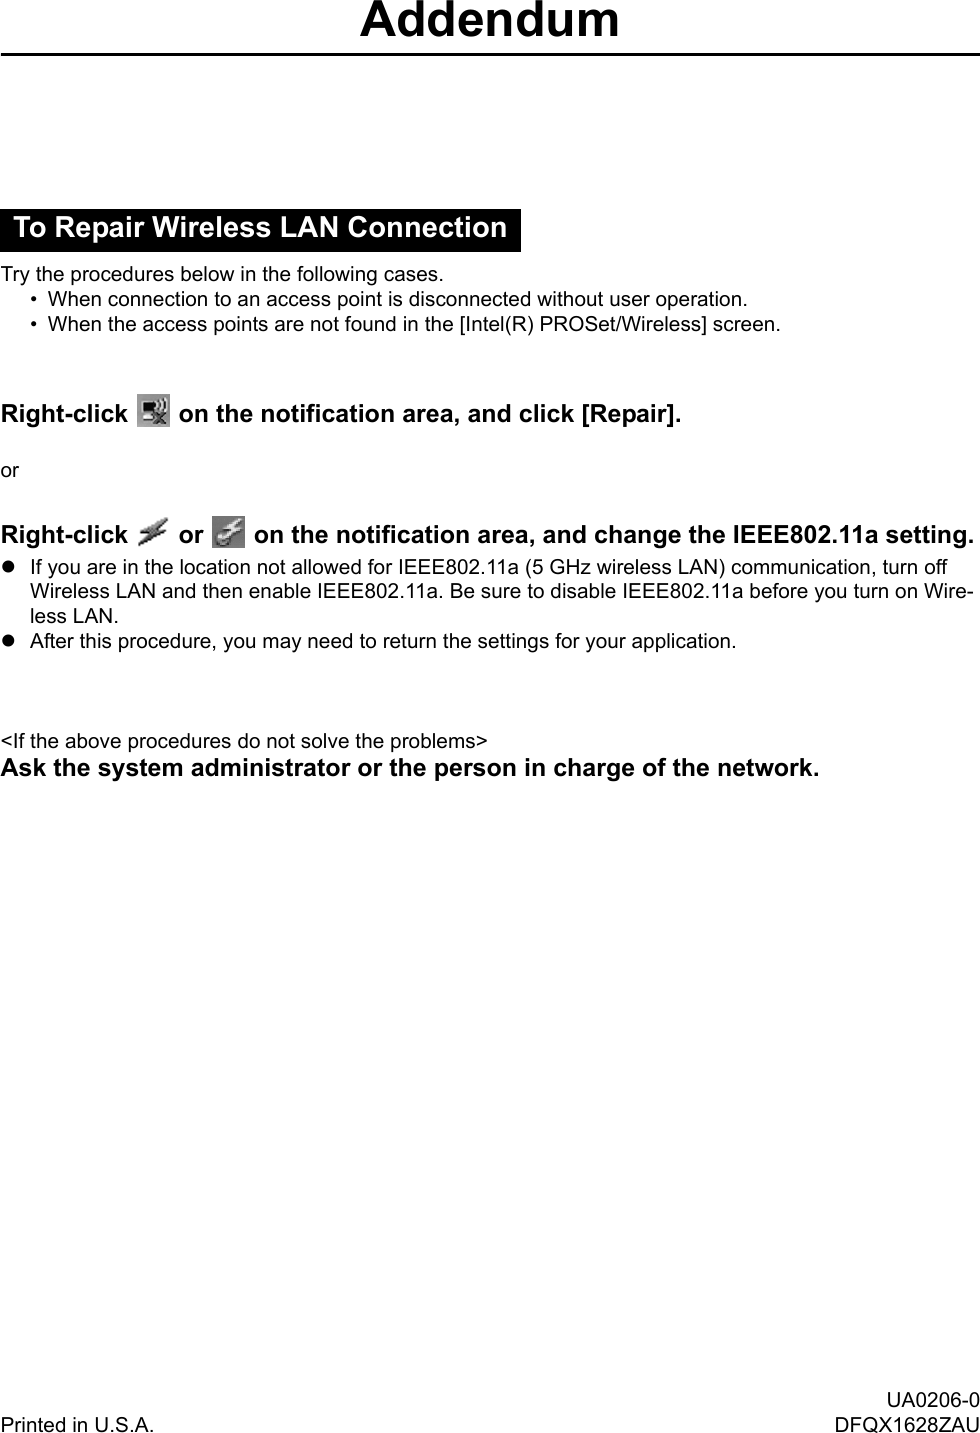 Page 1 of 1 - Panasonic CF-51xxxxE/Mxx (Feb 27‚ 2006) Addendum User Manual : 51mk3 E AD X1628ZAU Letter